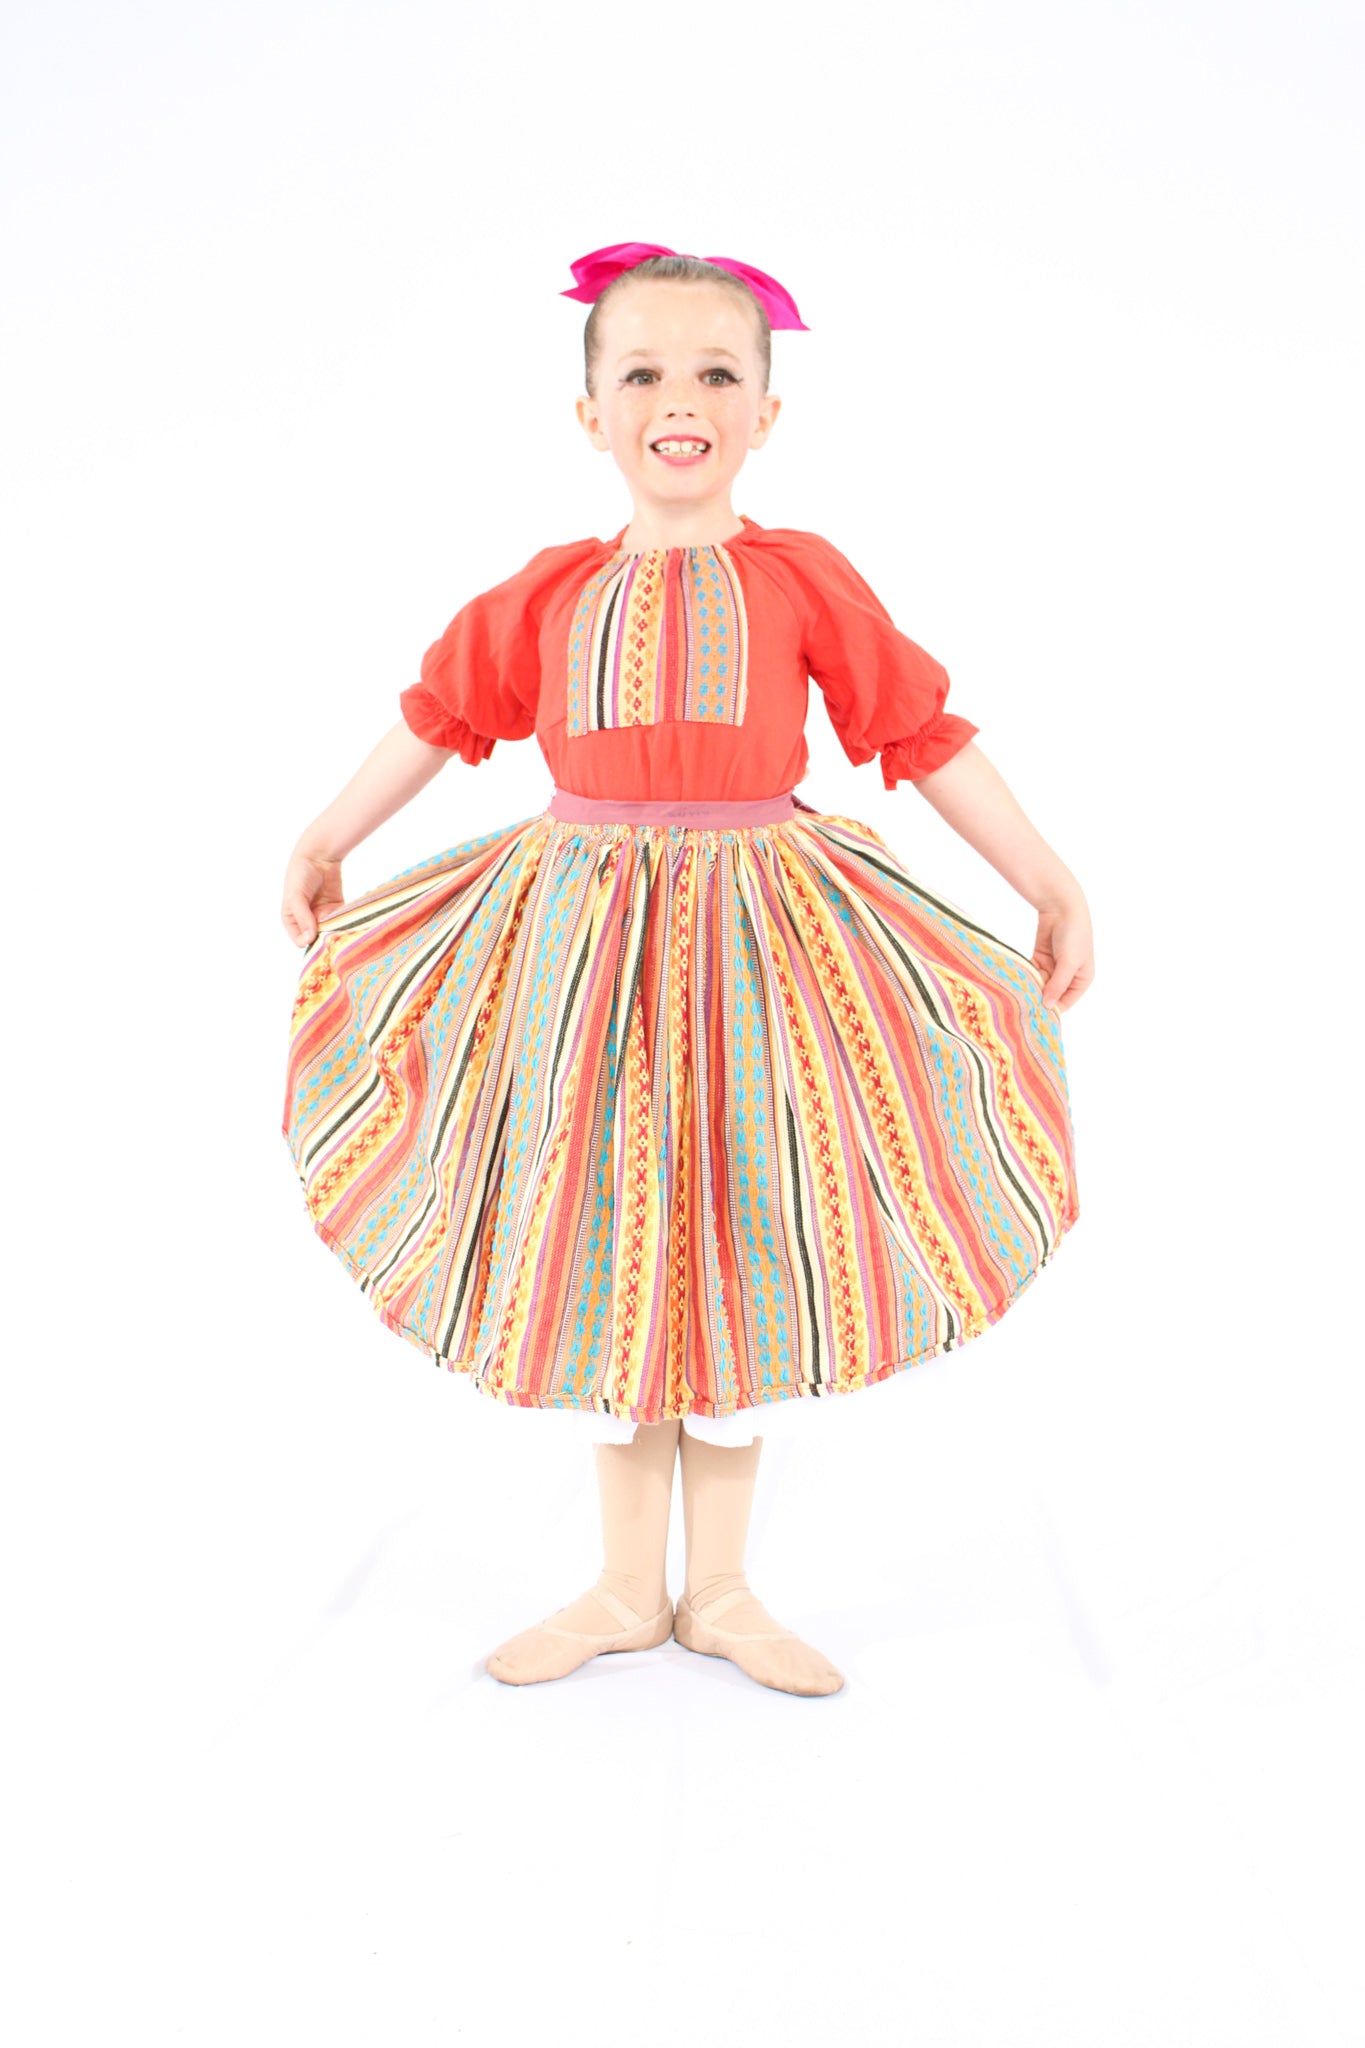 Costume Hire - Junior Skirts